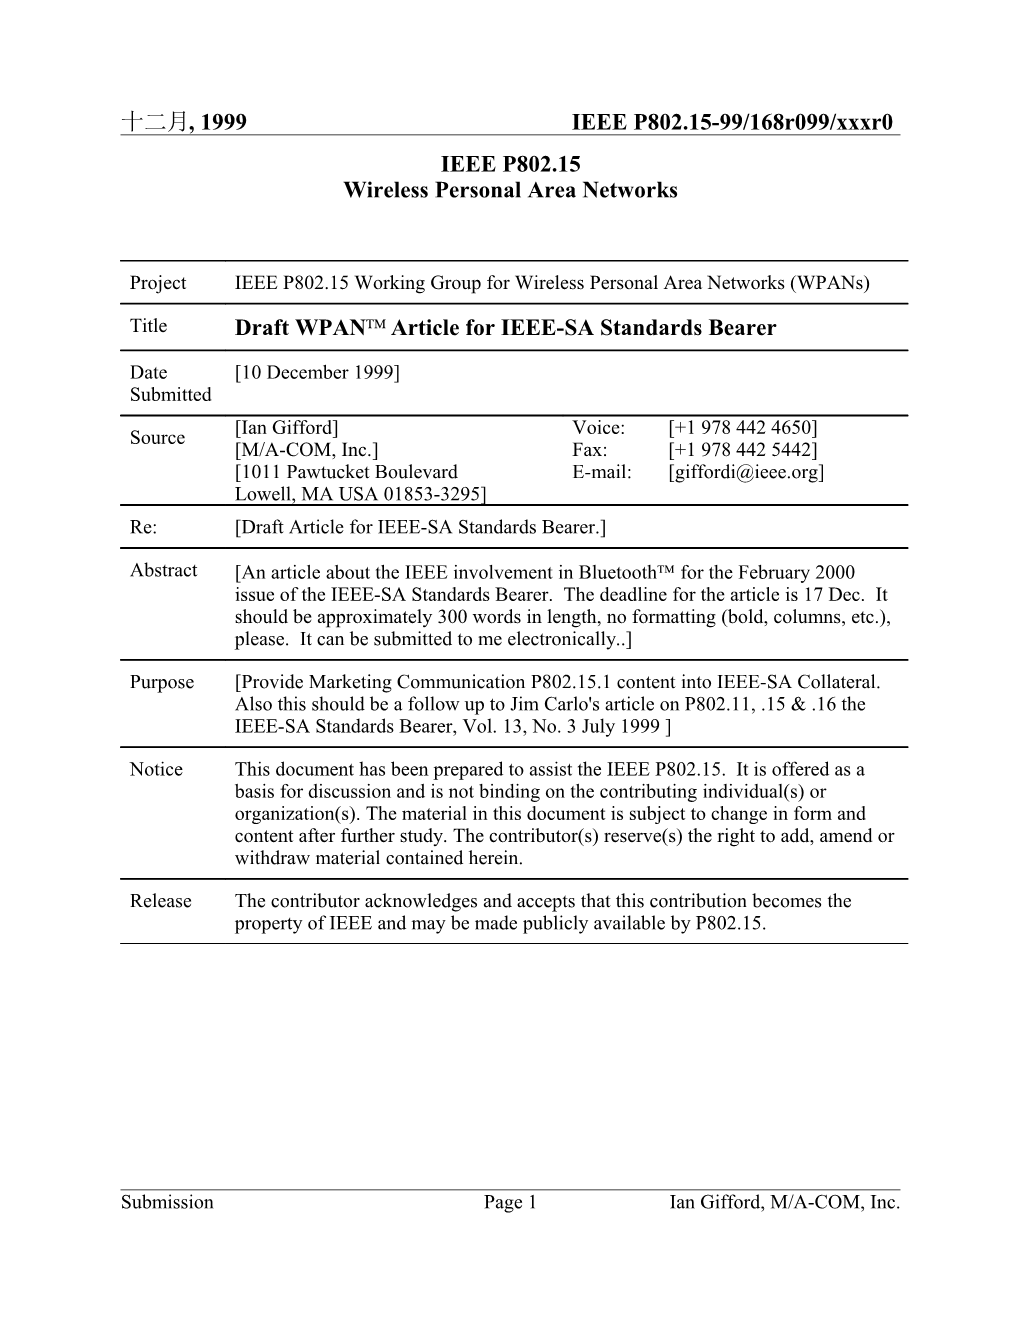 Draft WPAN Article for IEEE-SA Standards Bearer